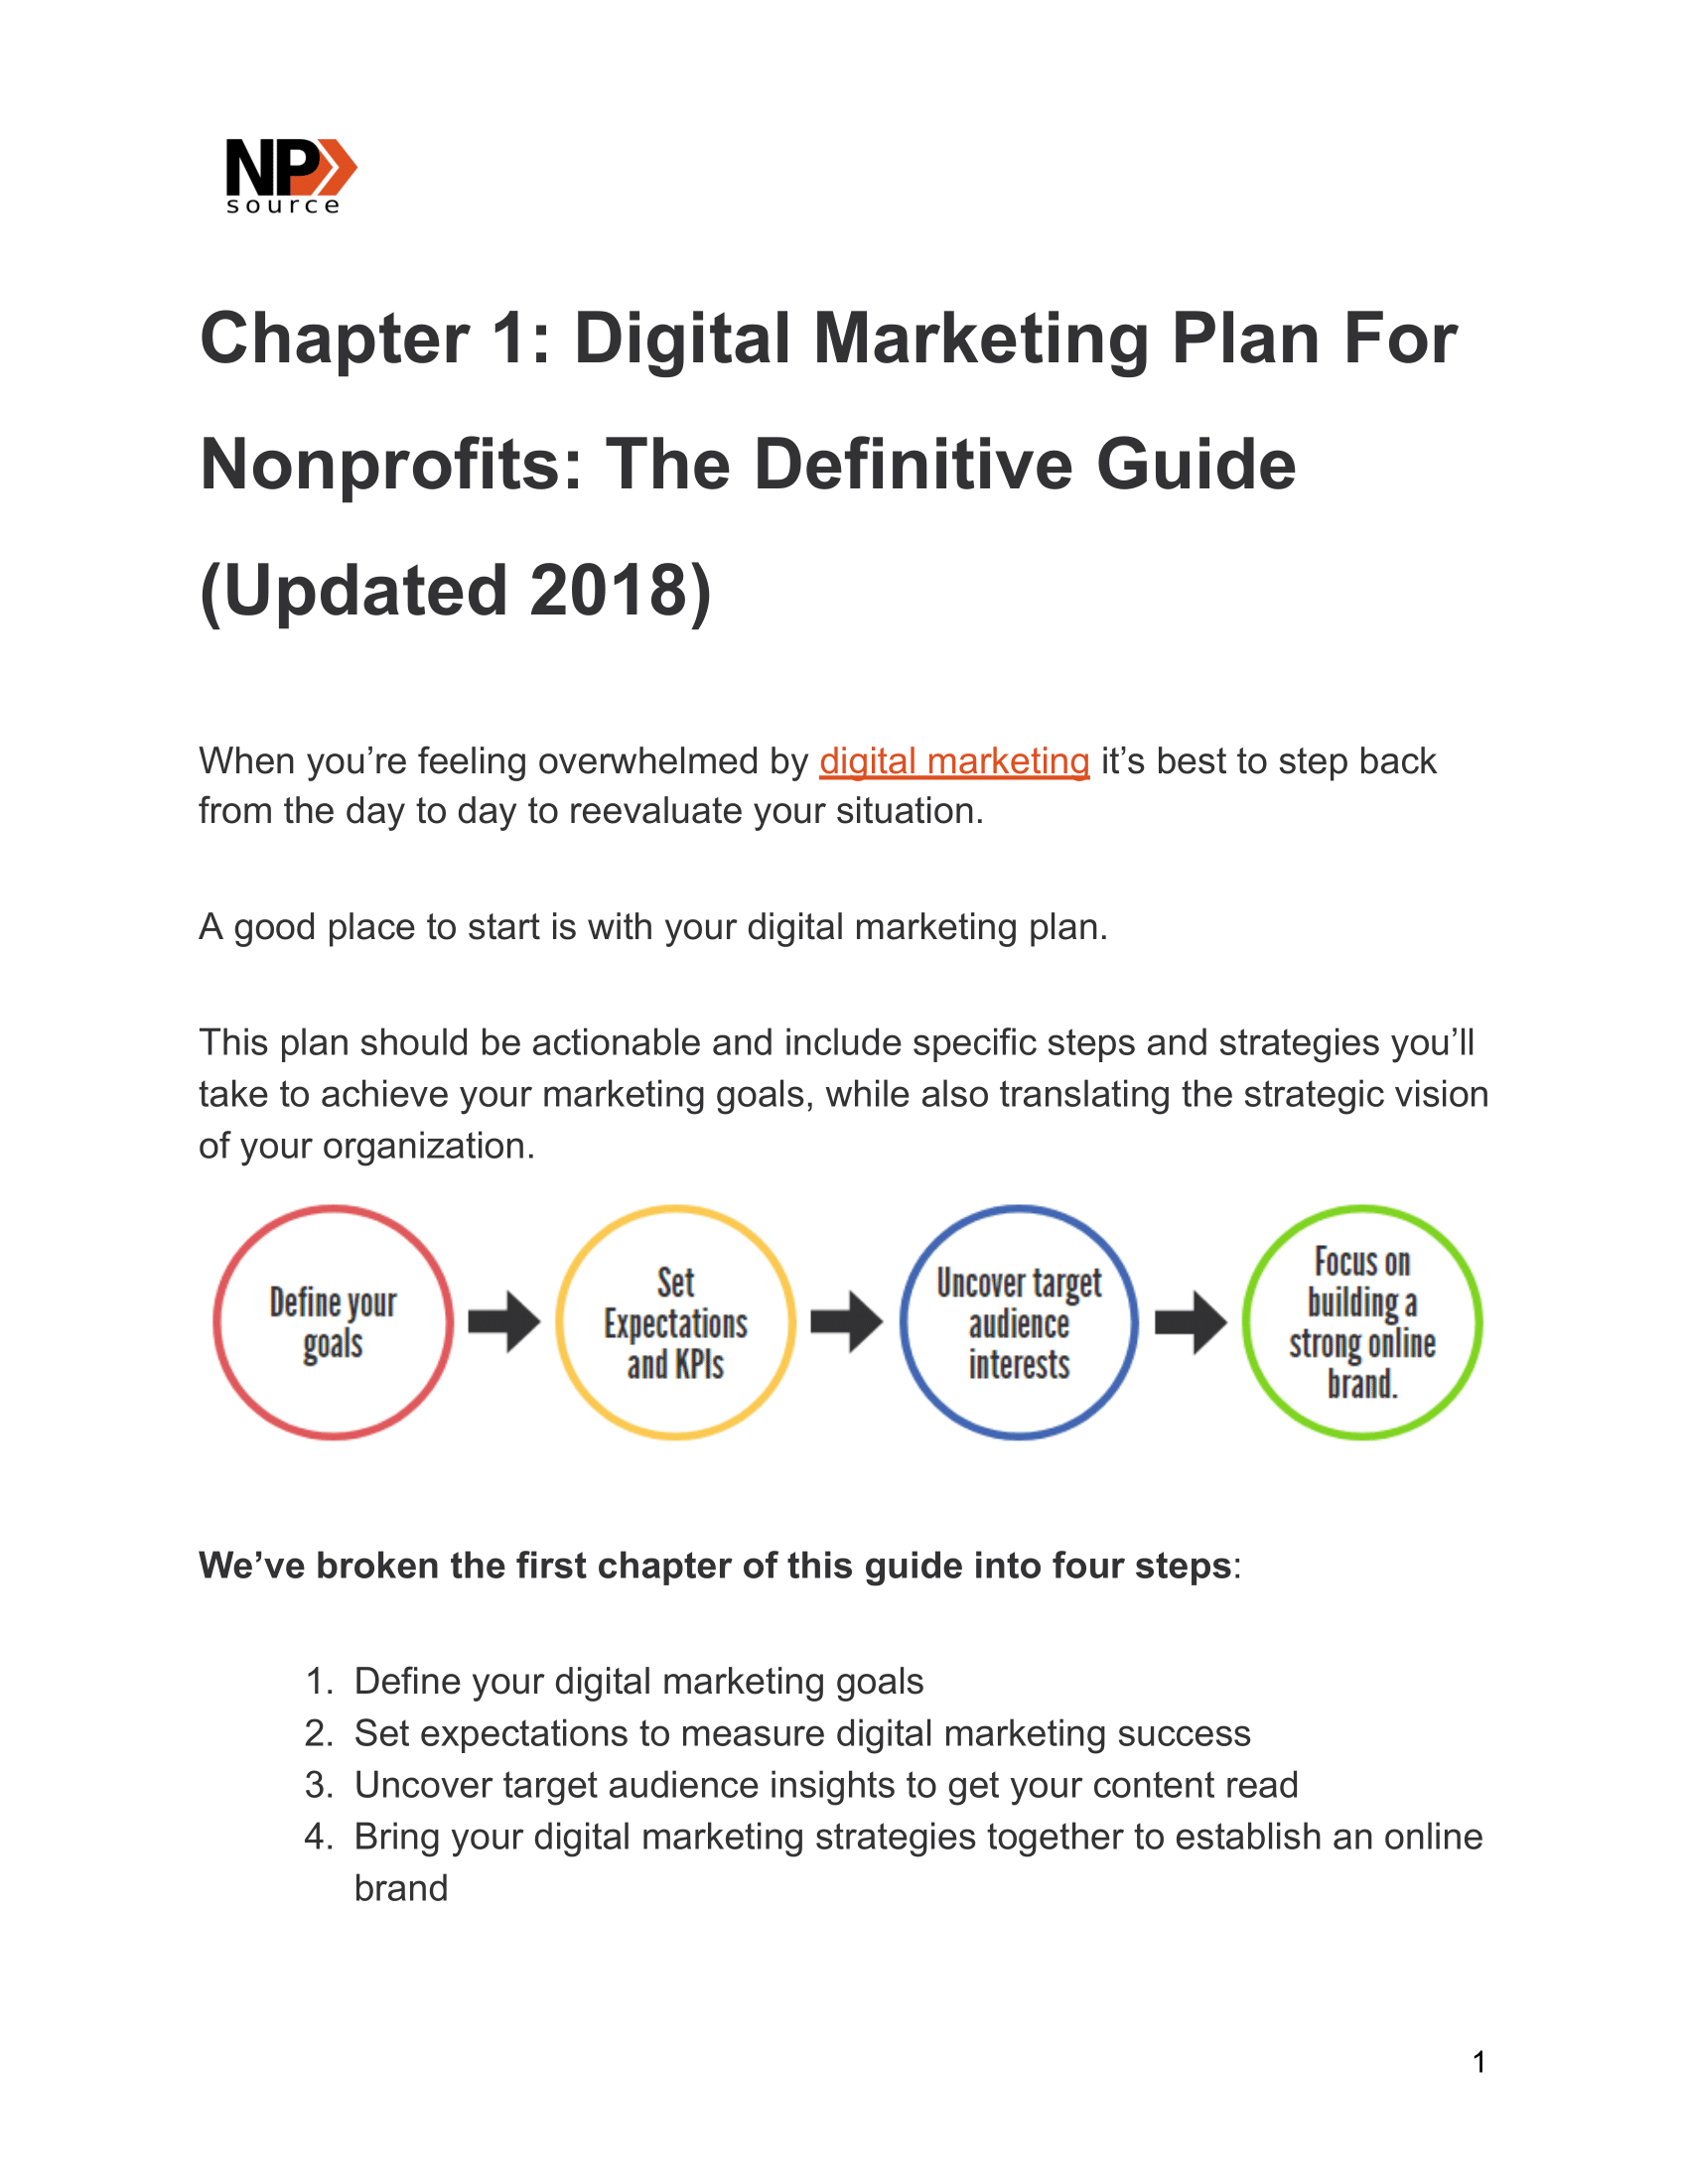 Digital Marketing Plan For Nonprofits Page 1 - Nonprofits Source